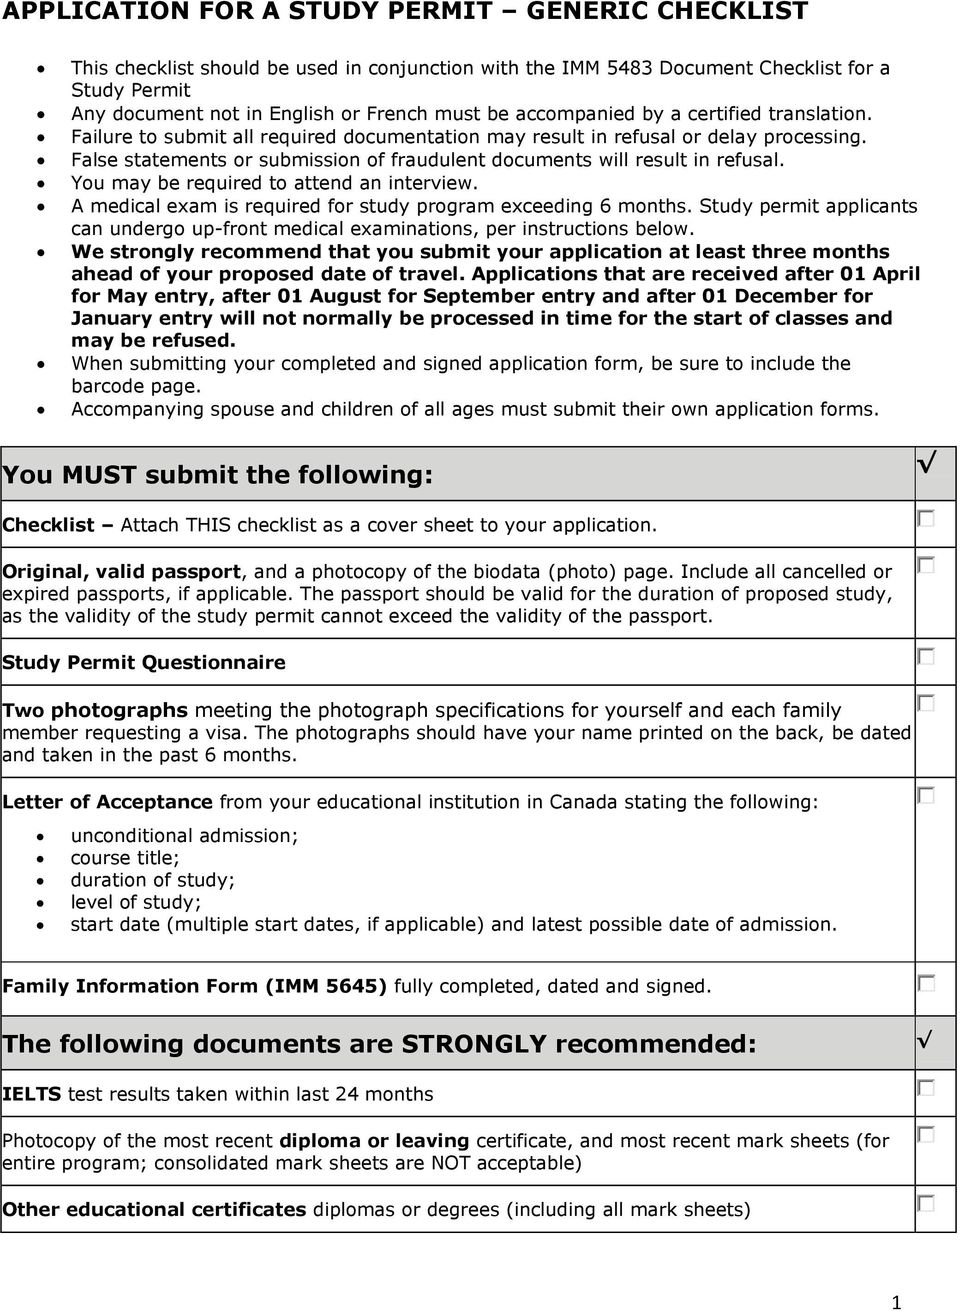 canada study permit document checklist